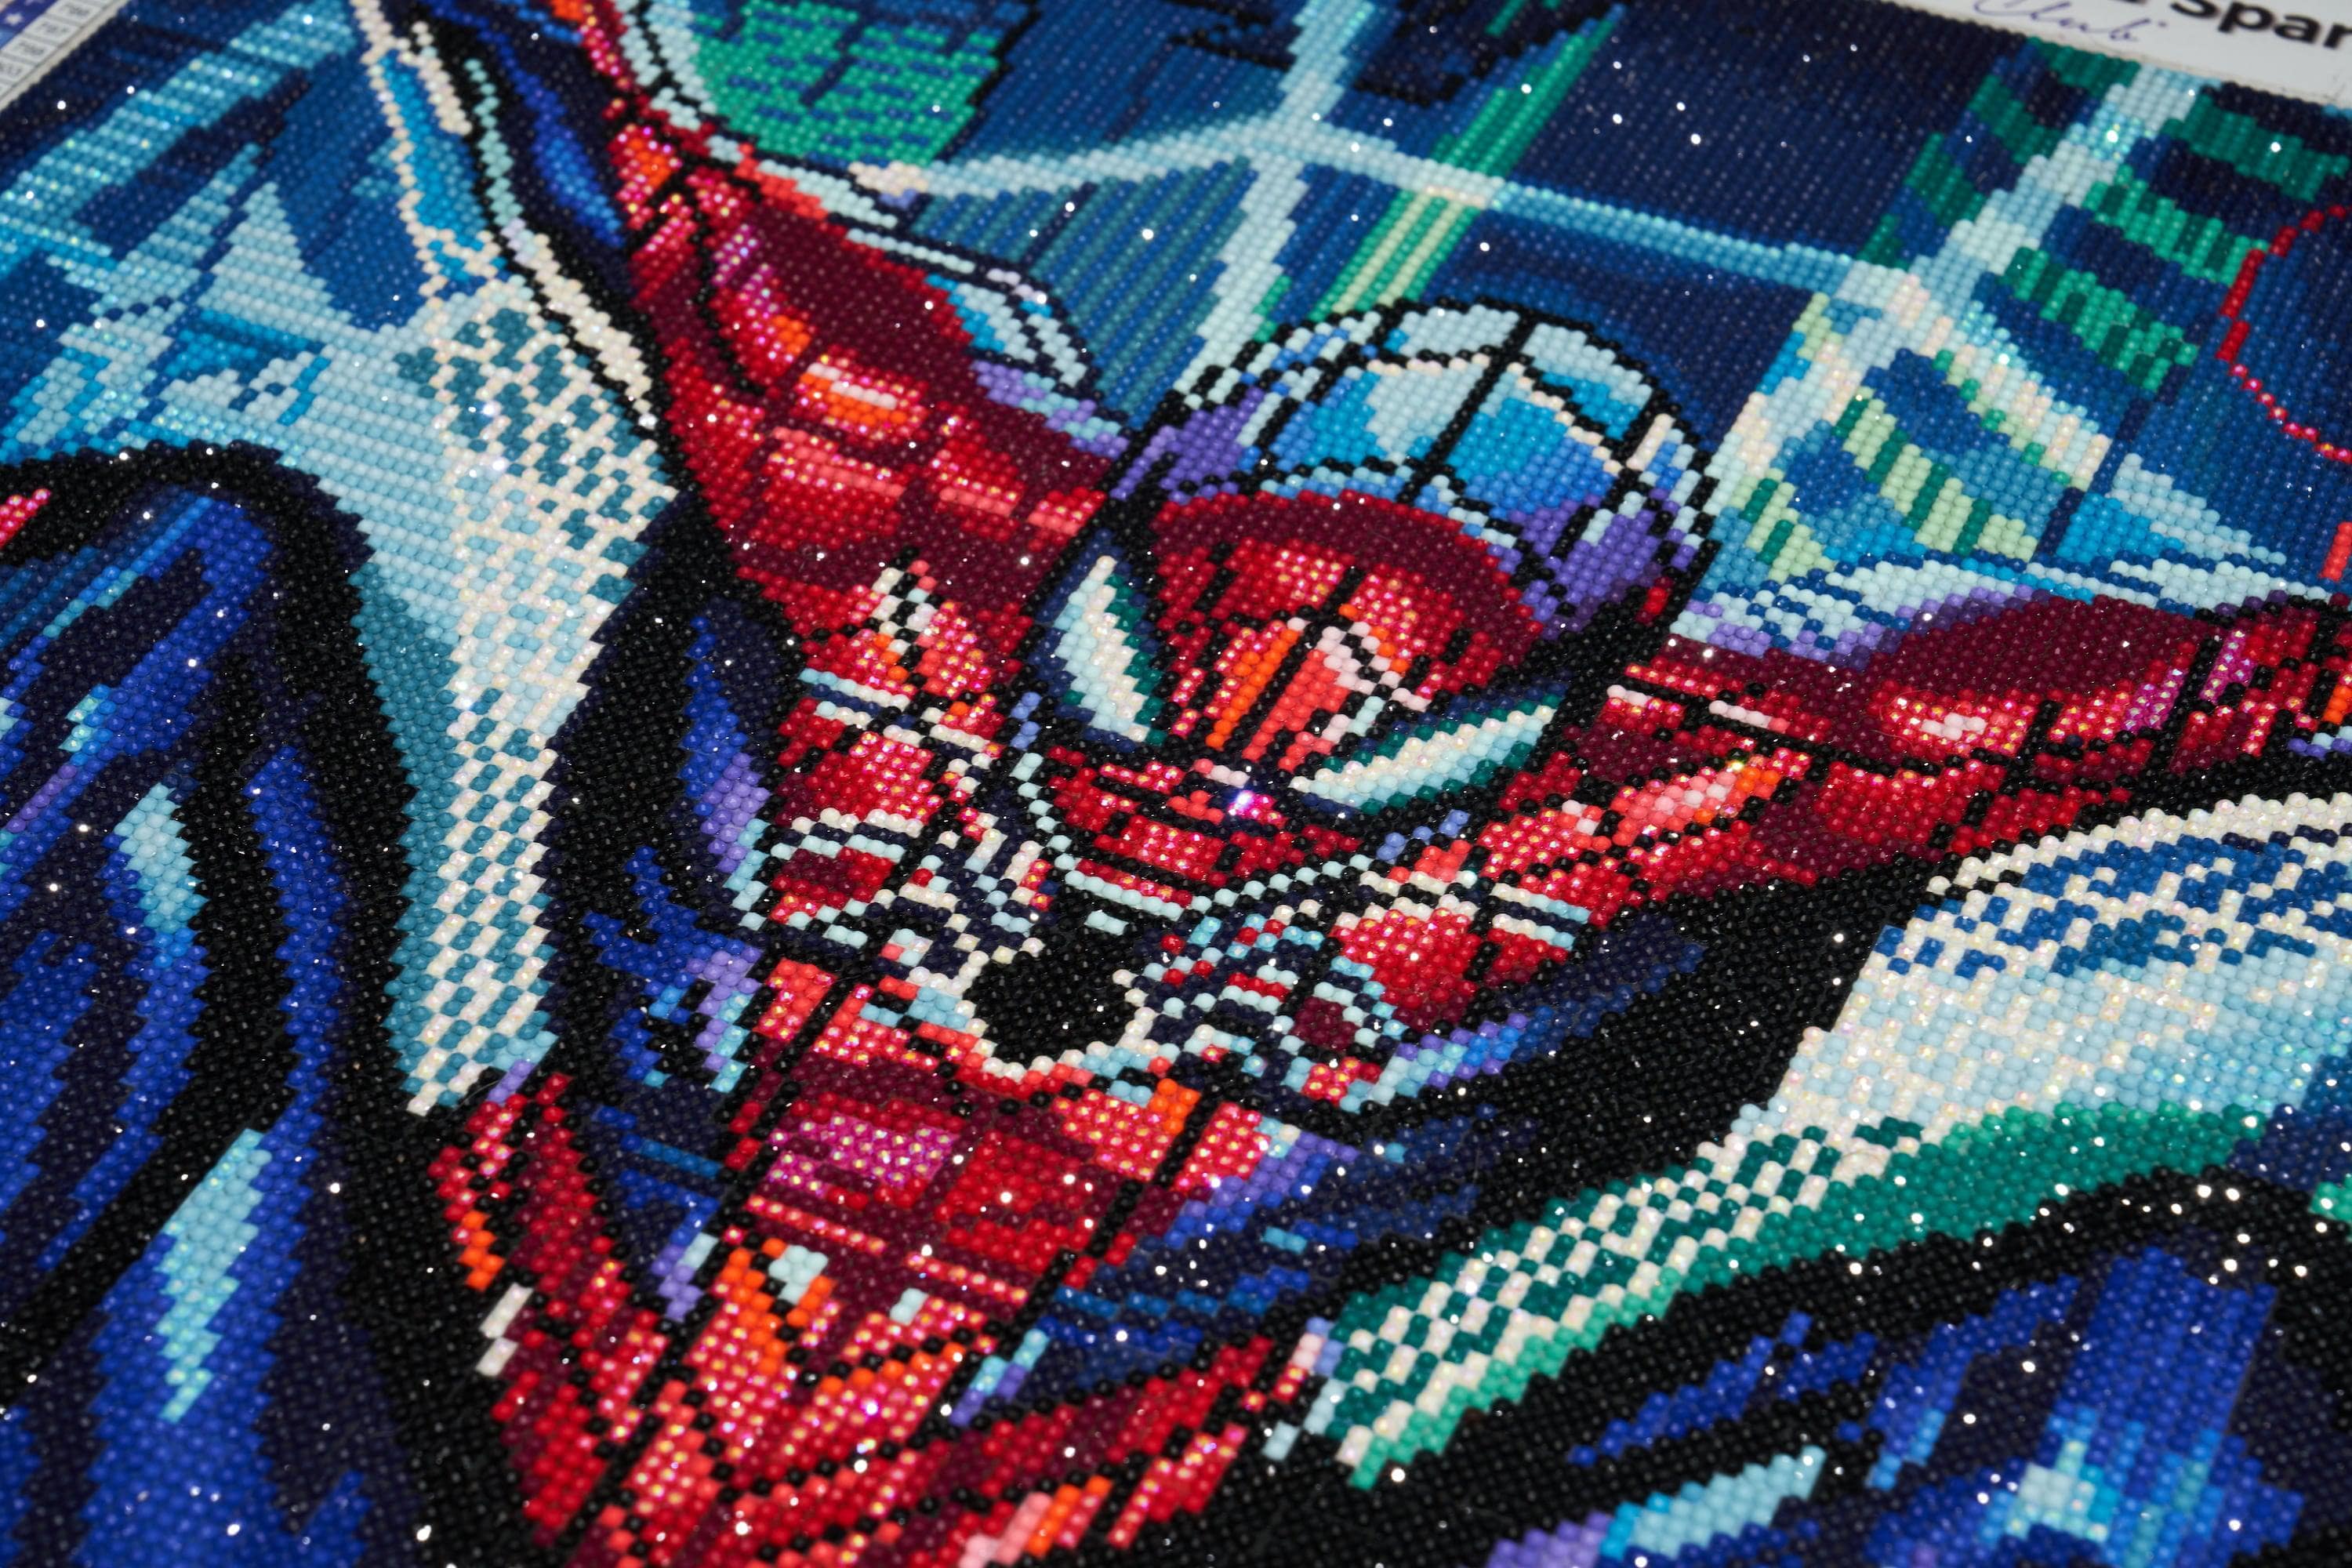 The Avengers Endgame Diamond Painting Kits 20% Off Today – DIY Diamond  Paintings